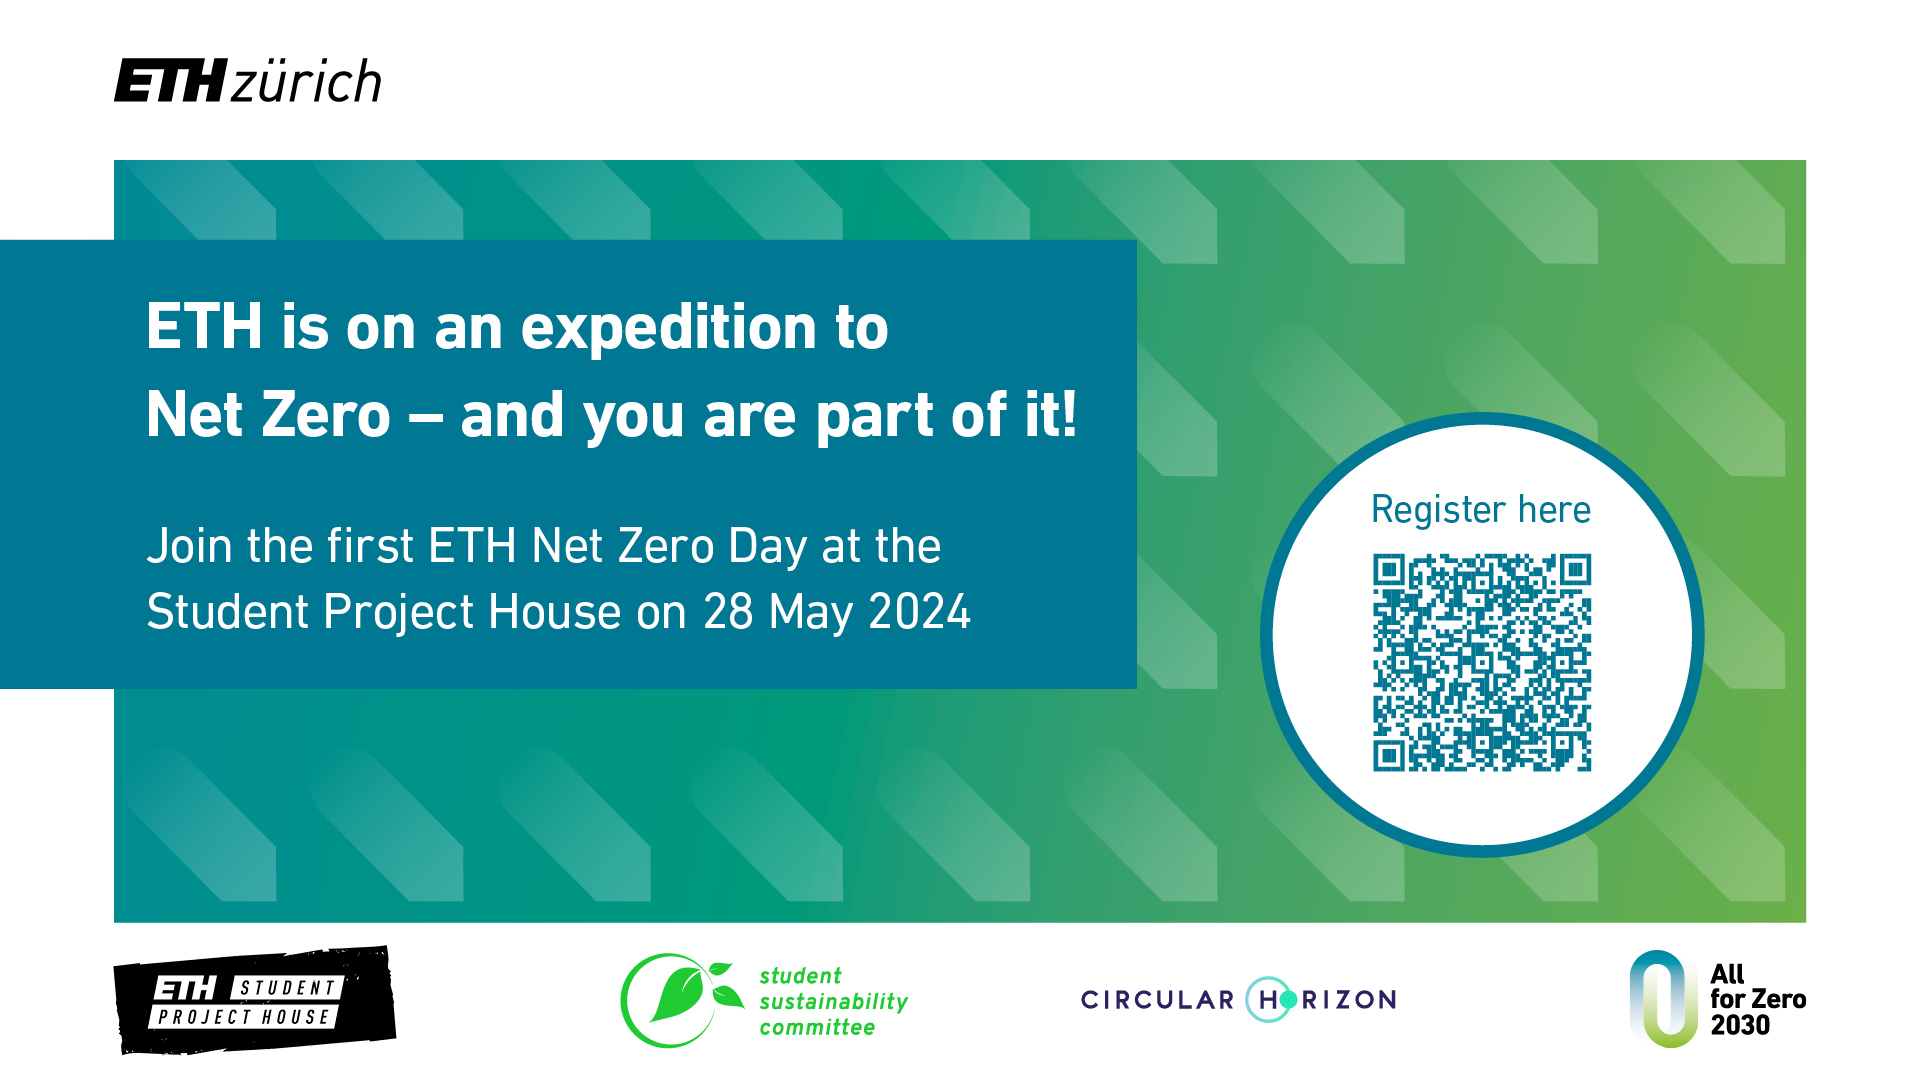 Link to ETH Zero Day registration